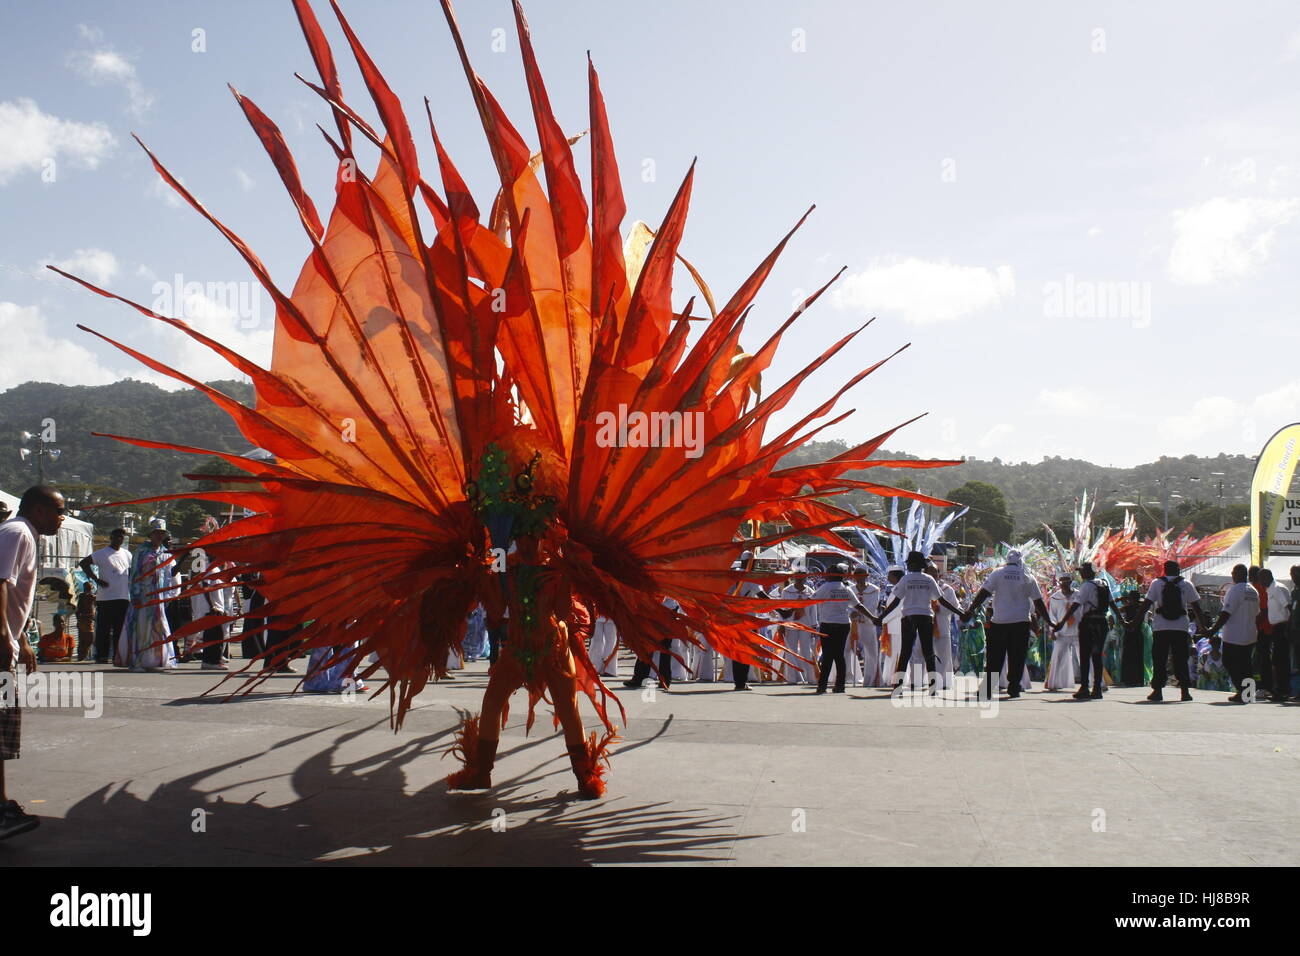 Person dancing Carnival in Orange Costume  In Trinidad. Stock Photo